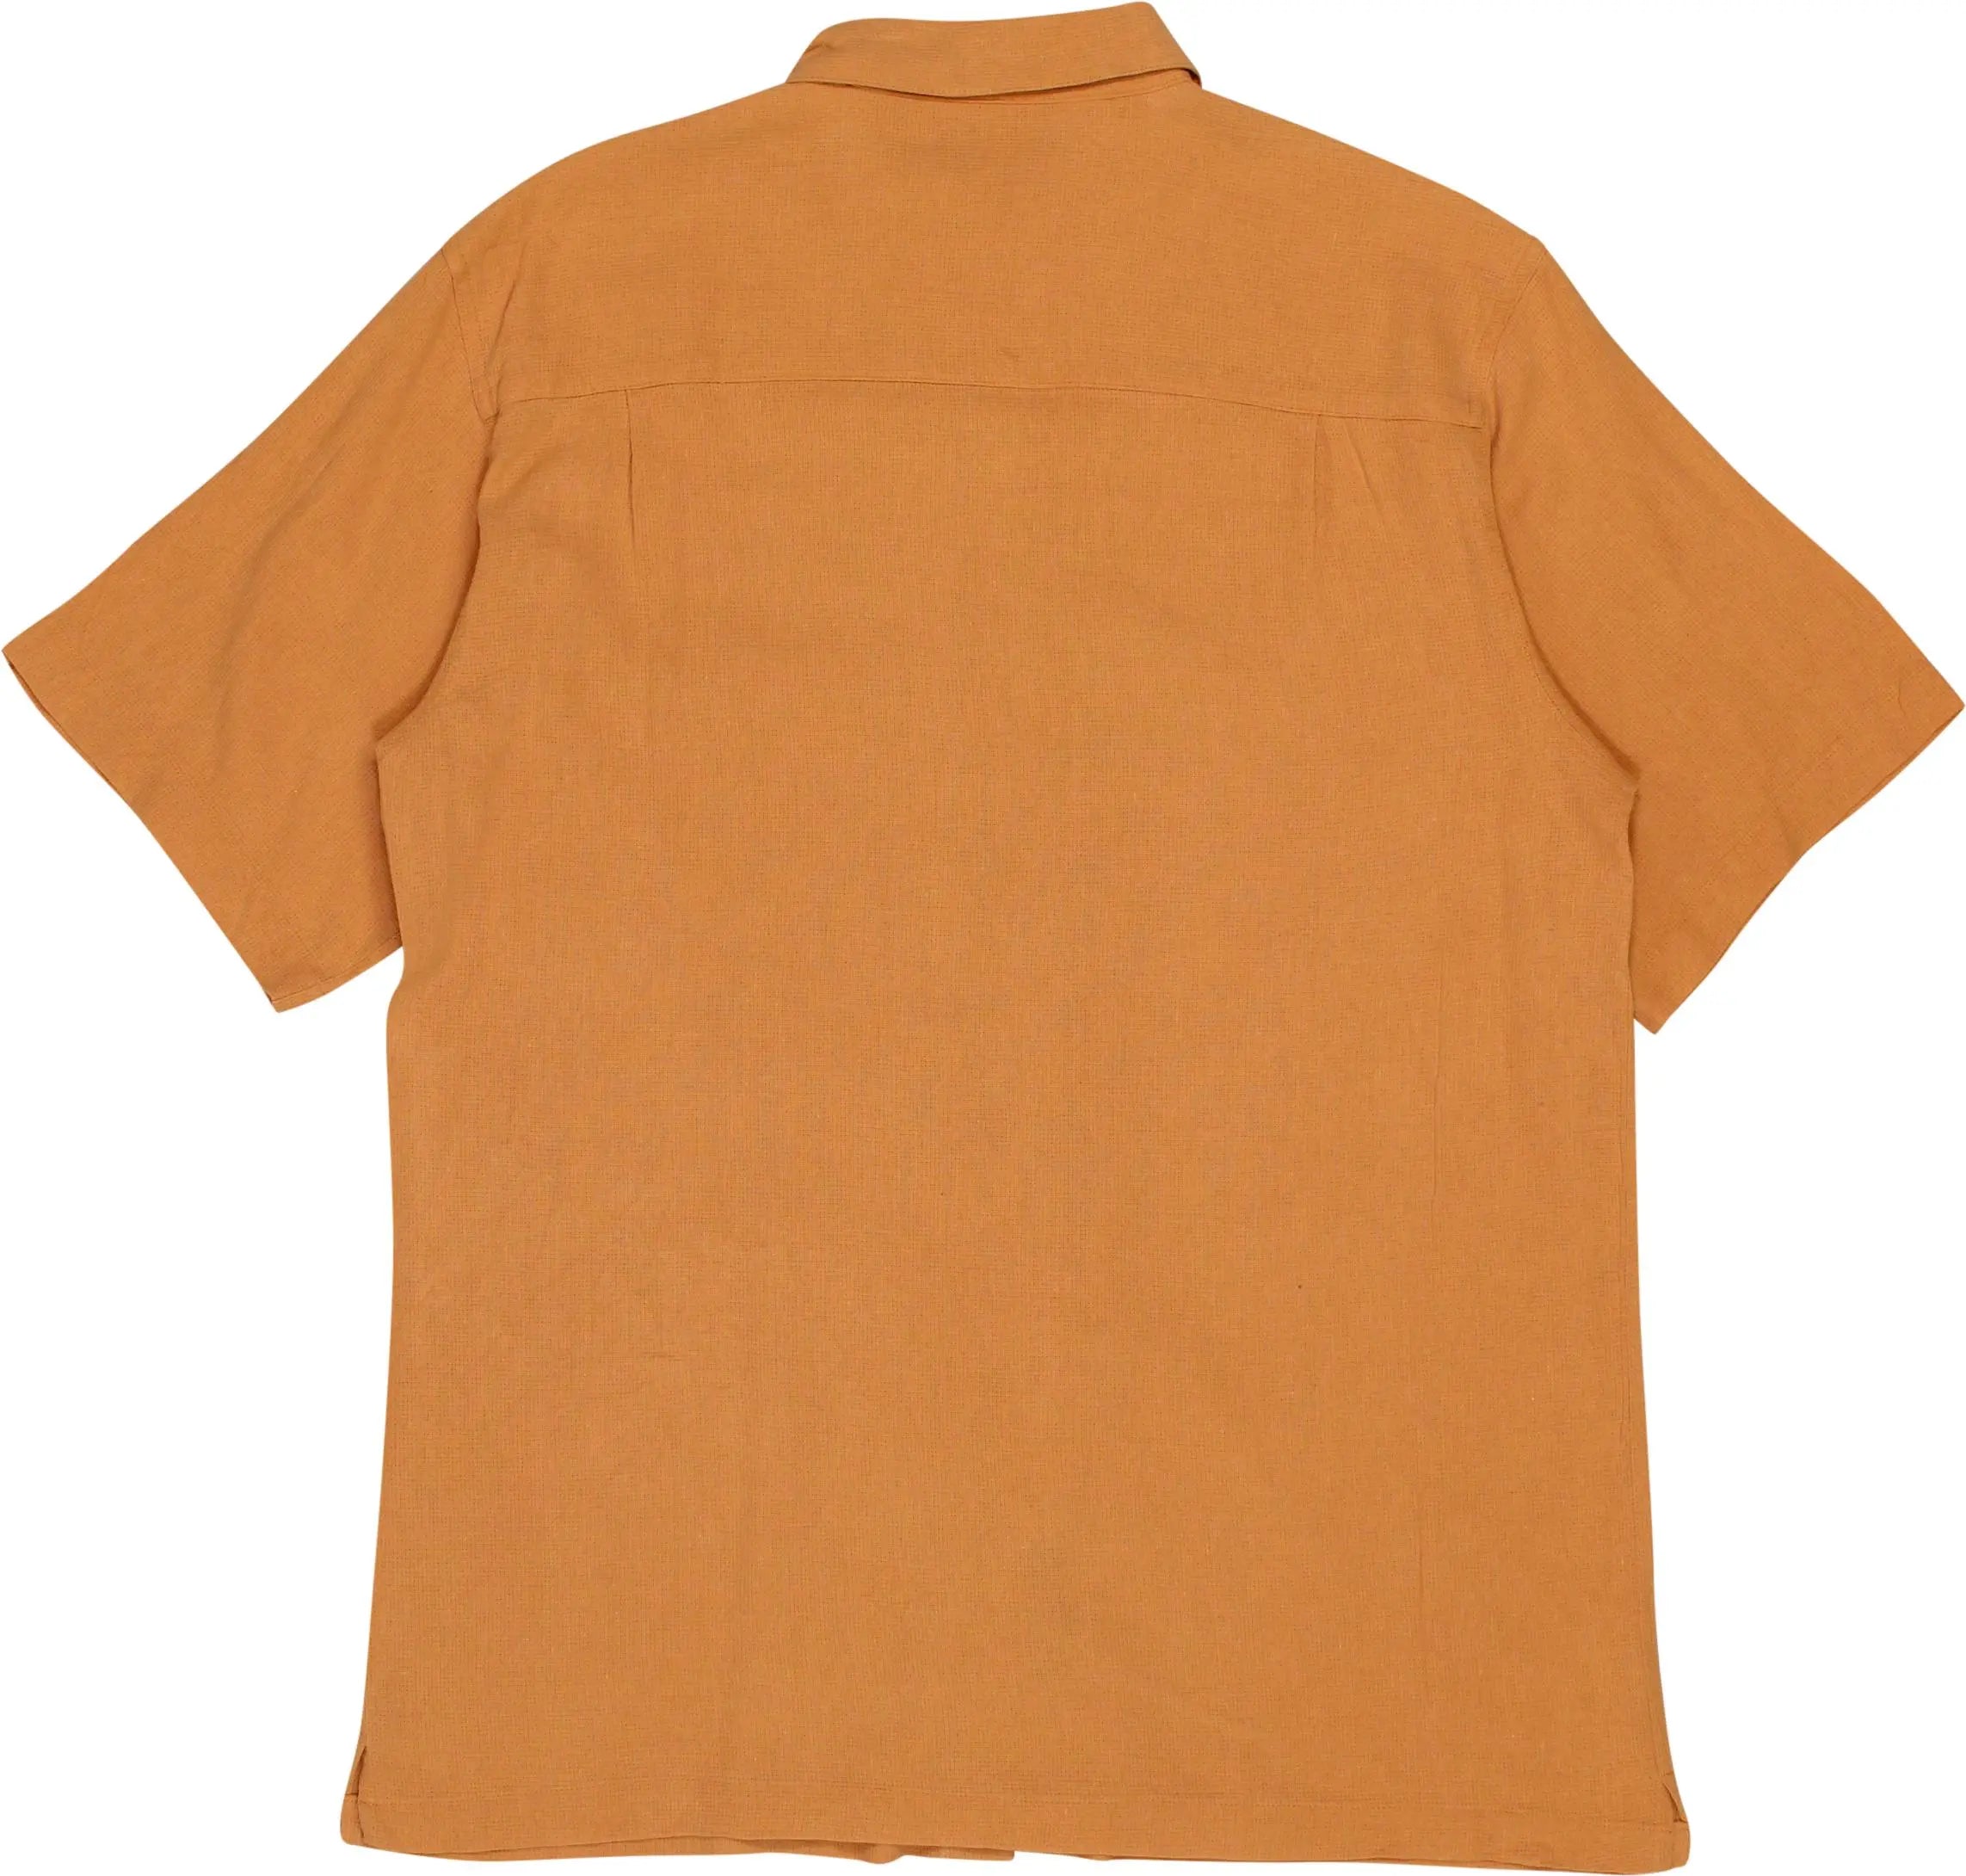 M.E. Sport - Orange Shirt- ThriftTale.com - Vintage and second handclothing